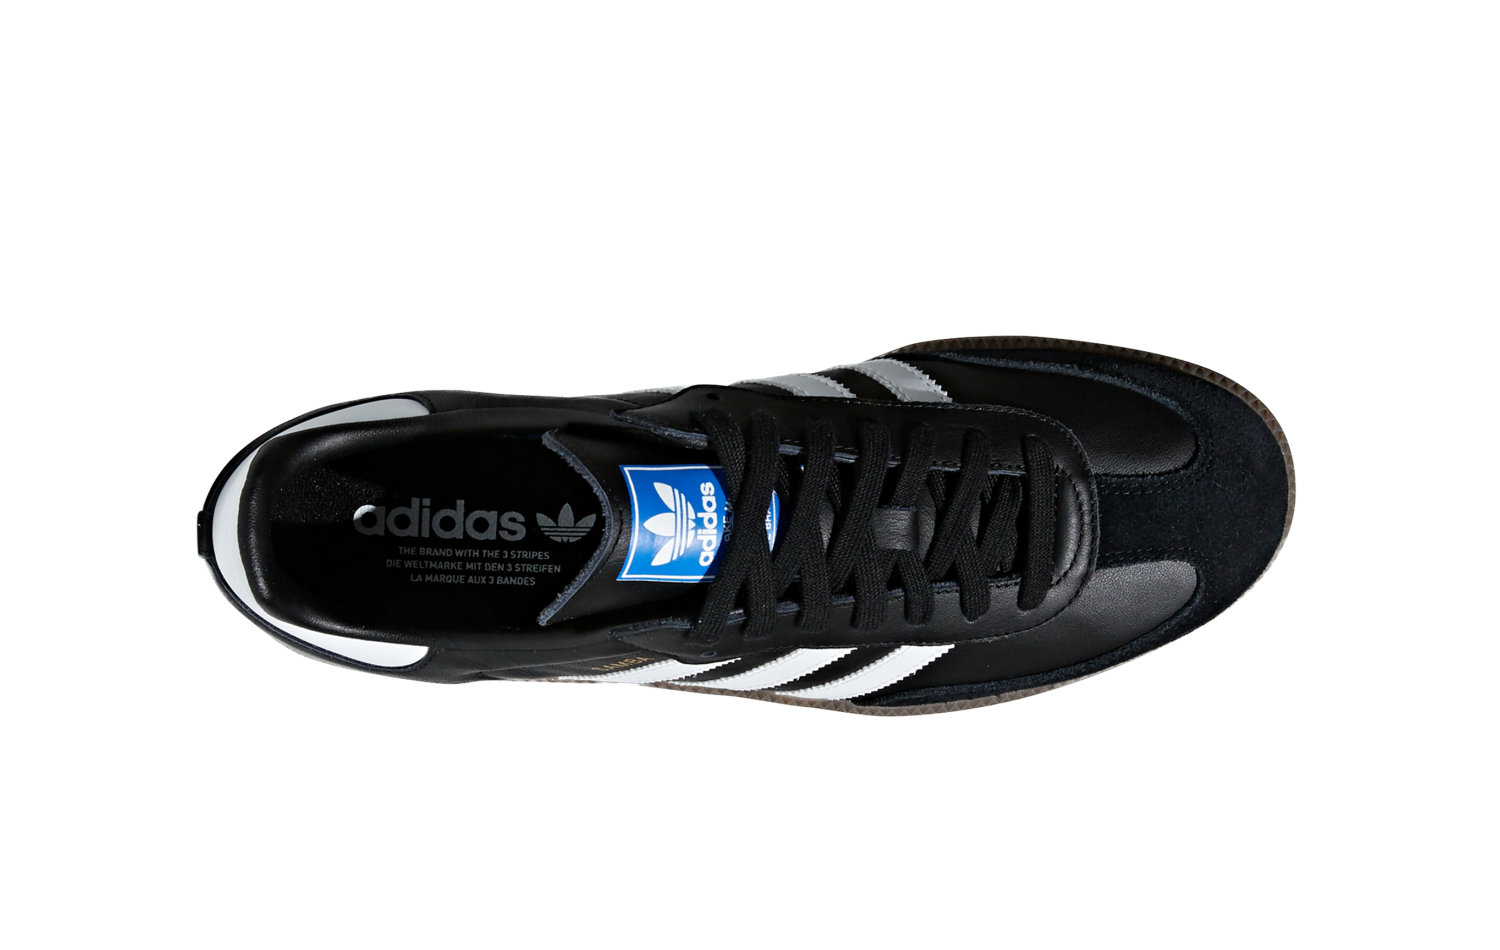 Adidas Samba OG (B75807)